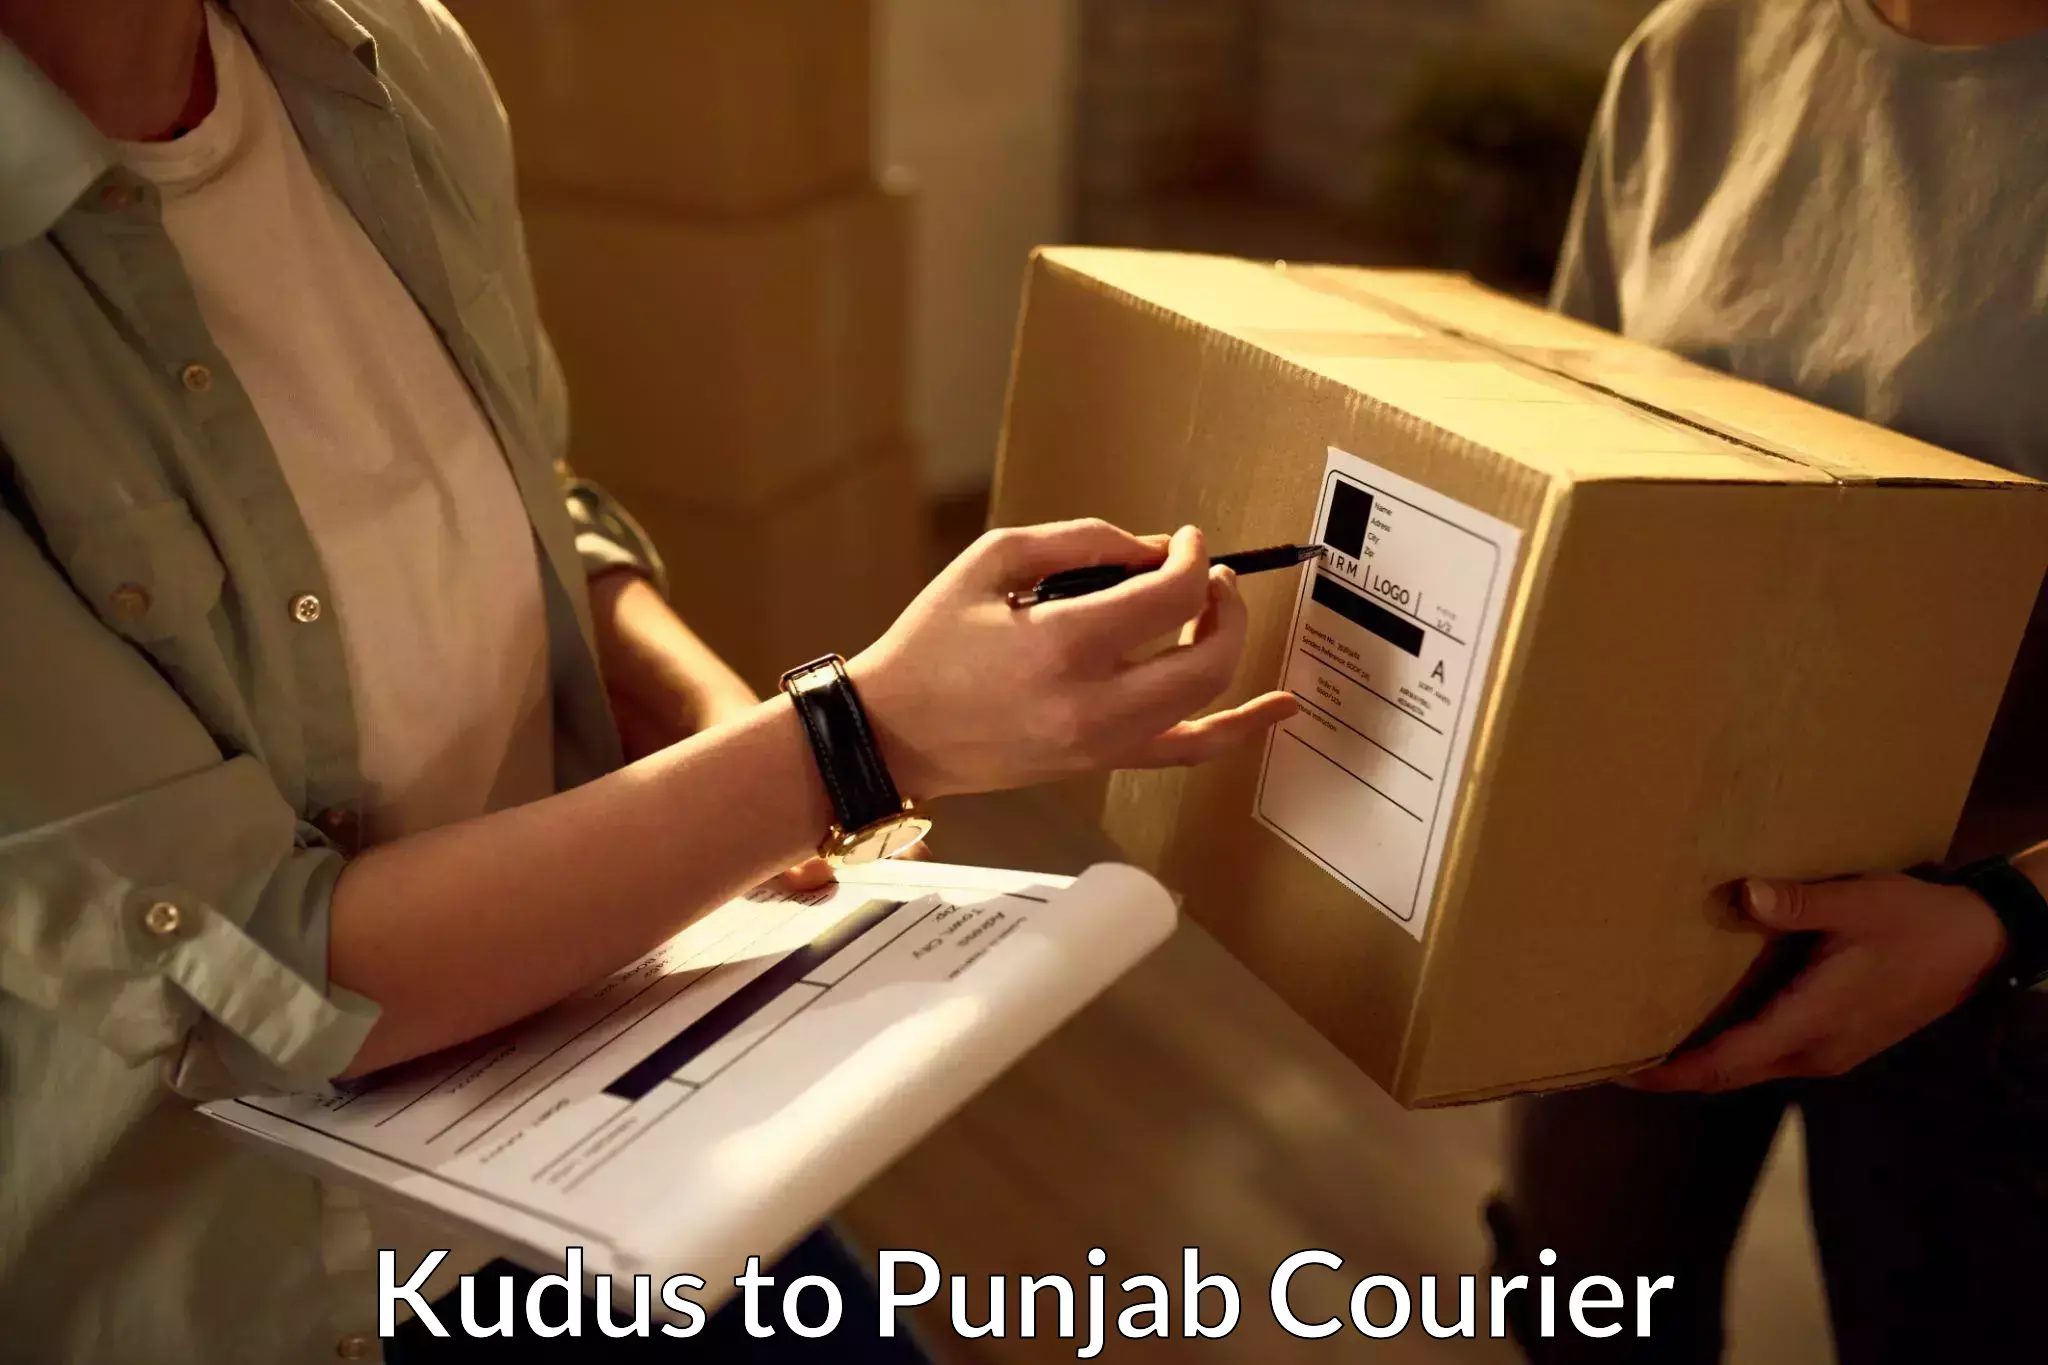 Sustainable shipping practices Kudus to Punjab